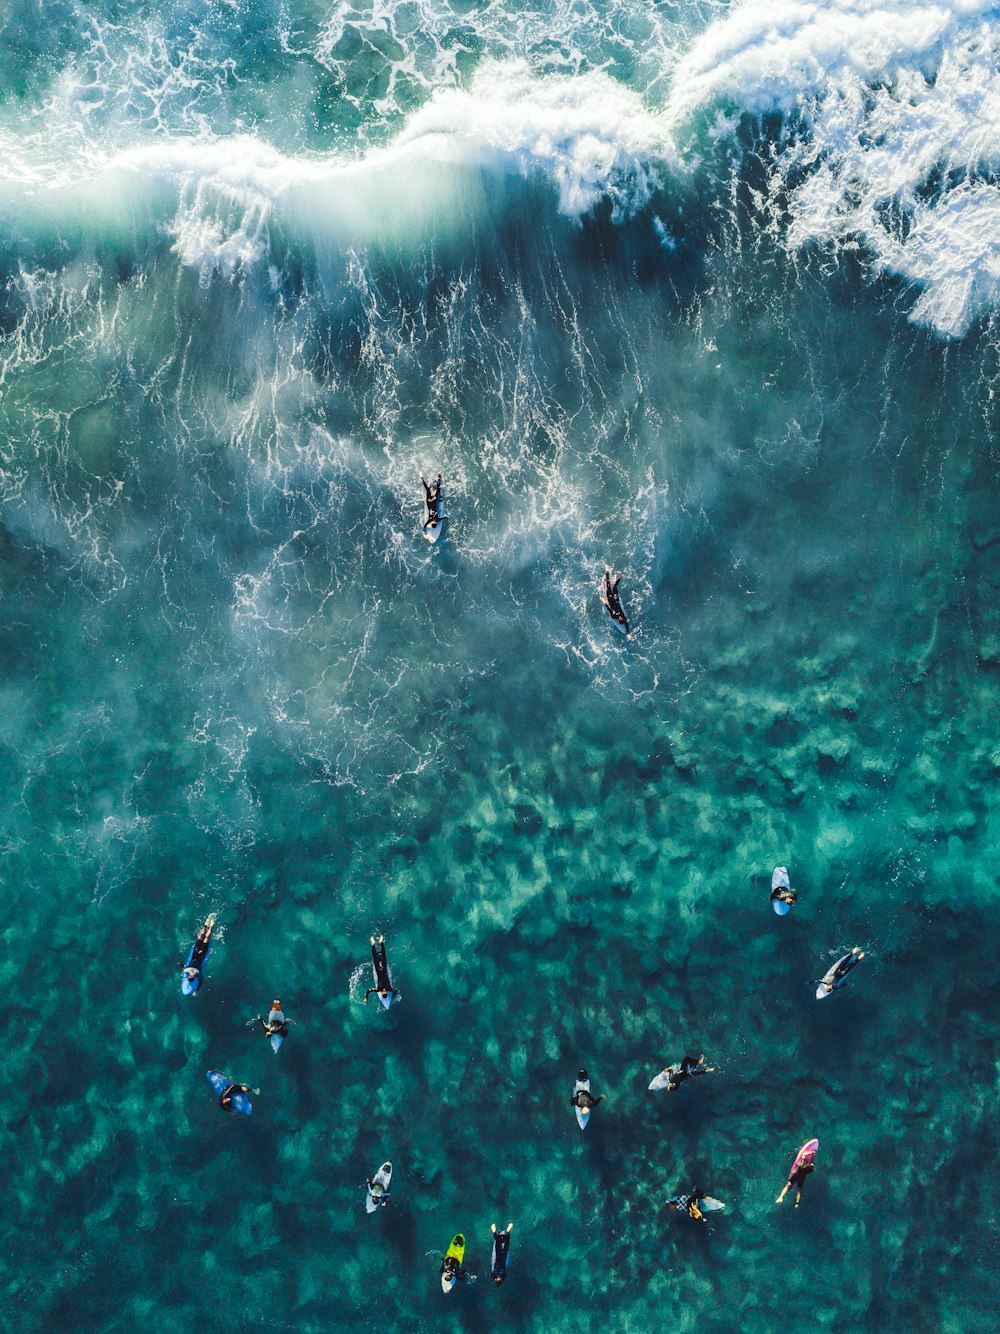 1500+ Surf Pictures  Download Free Images on Unsplash